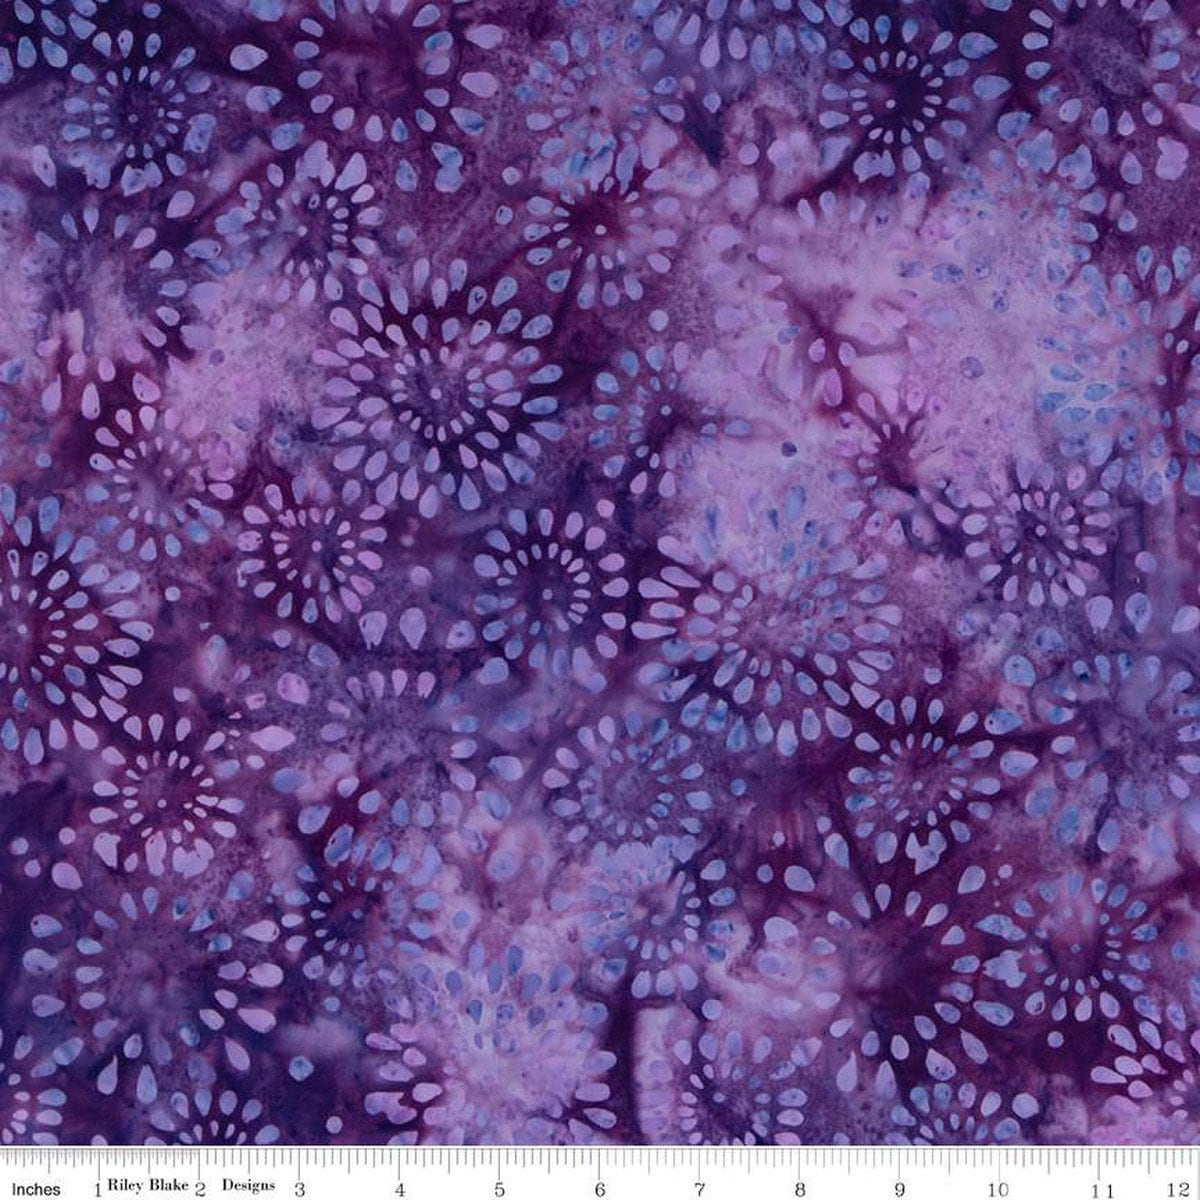 Expressions Batiks Tjaps Purple Batik Fabric - Riley Blake Designs BTHH1034, Purple Floral Batik Fabric, Purple Batik Fabric By the Yard